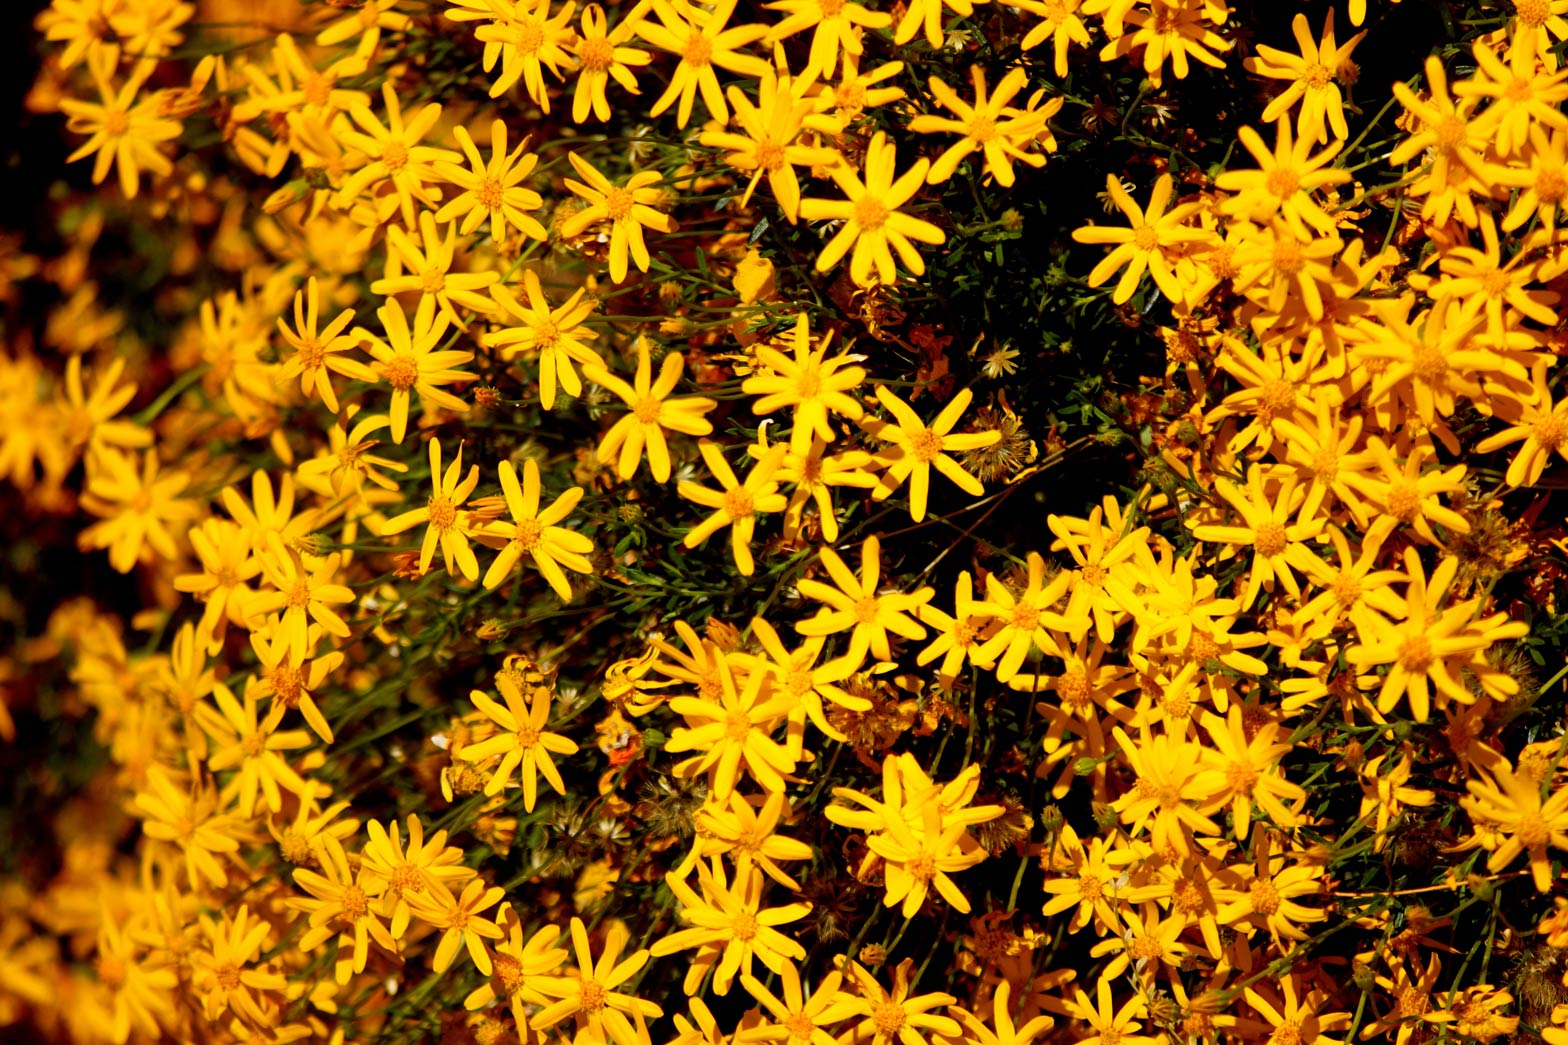 A close-up of Damianita blooms.